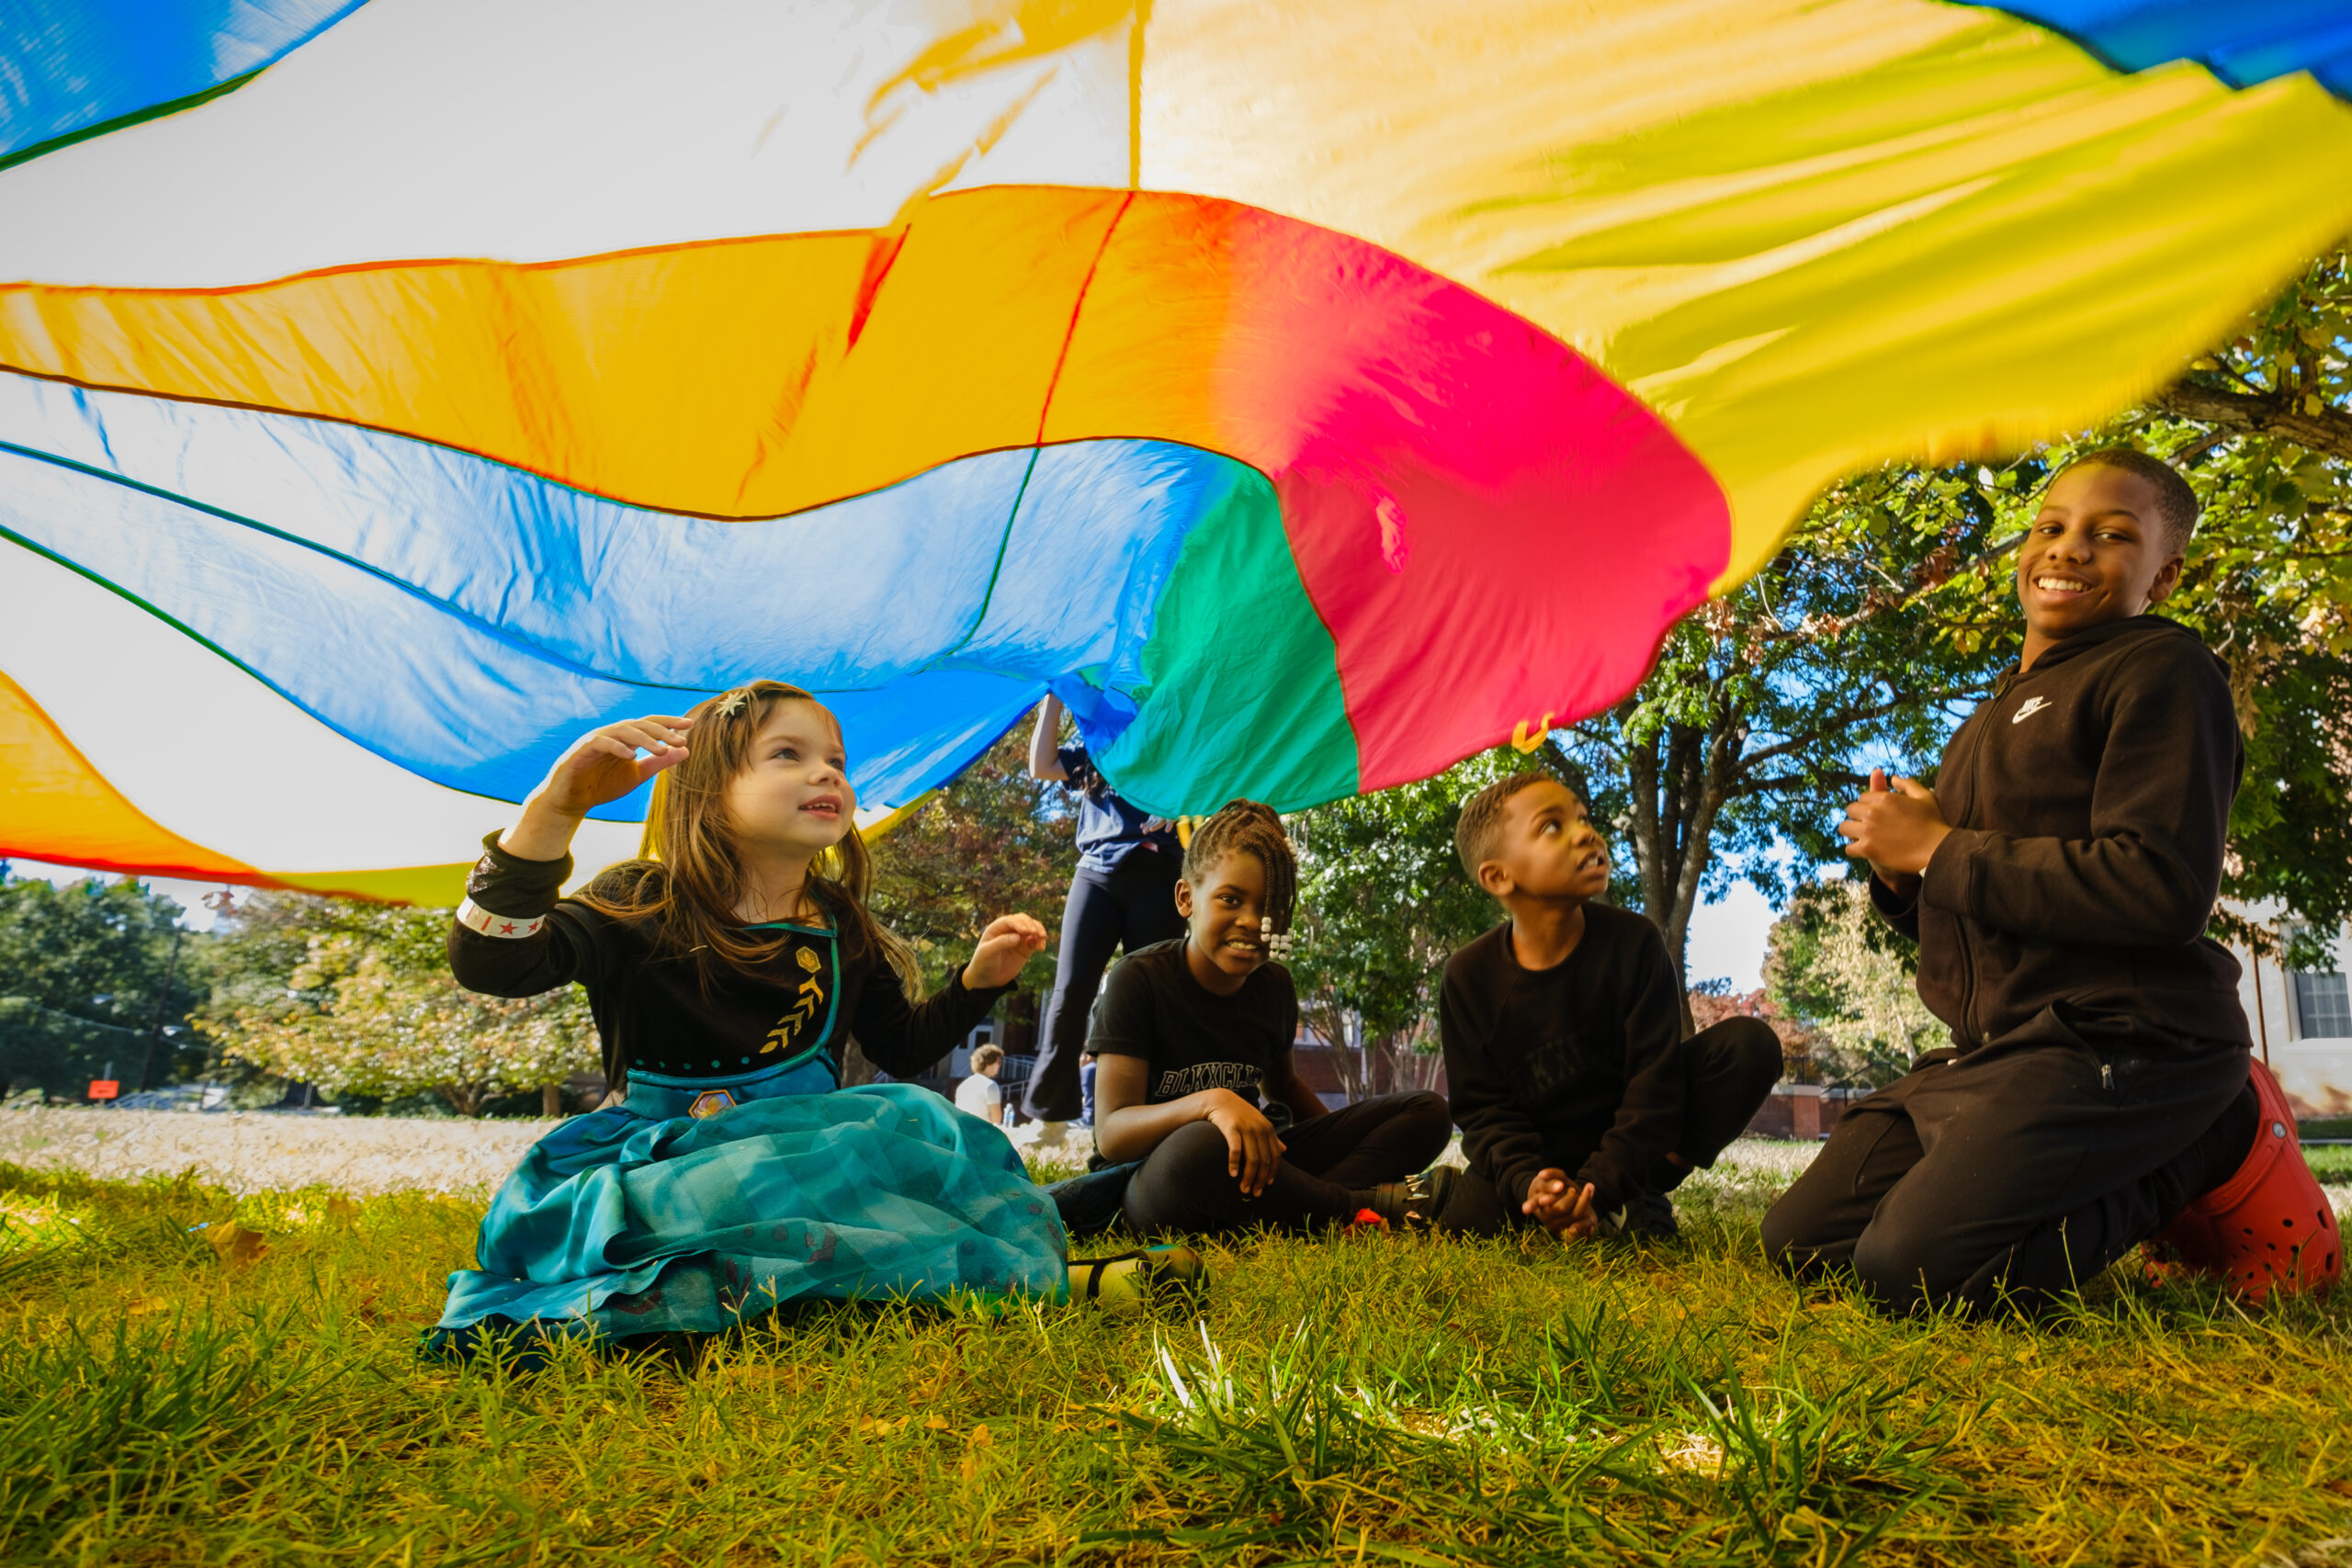 Four children gather under a colorful parachute at the Children's Festival.